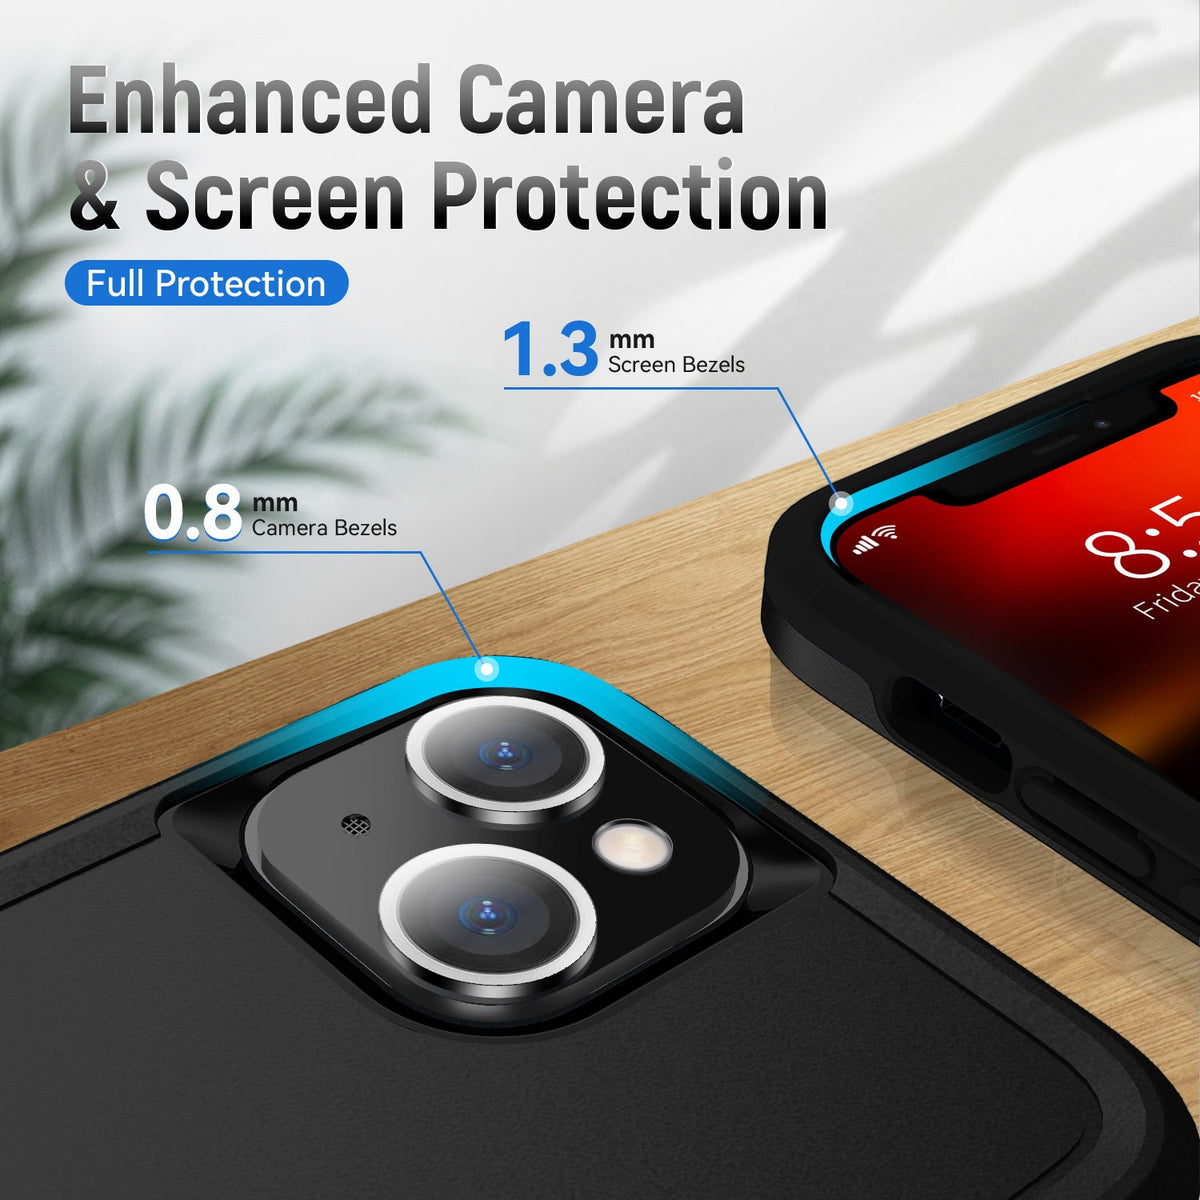 Phonix Case For iPhone 14 Pro Black Armor Light Case